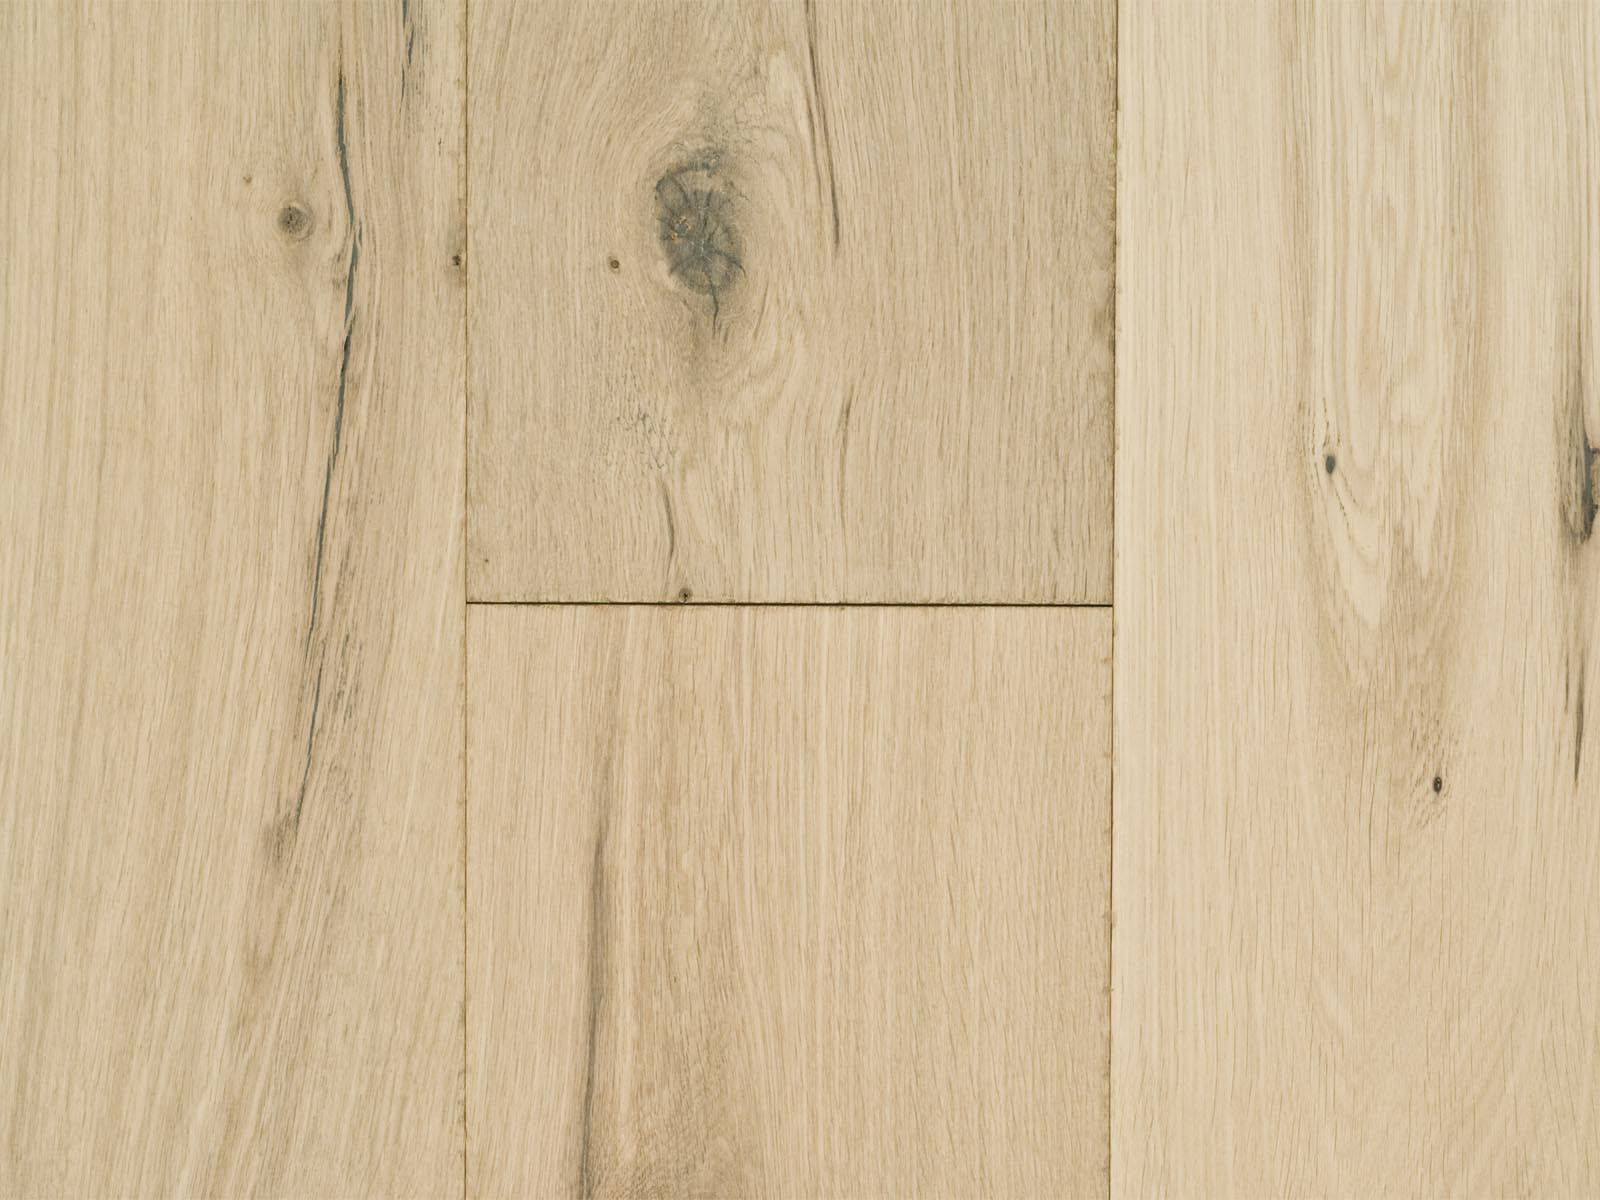 walnut hardwood flooring reviews of duchateau hardwood flooring houston tx discount engineered wood with regard to white oiled european oak